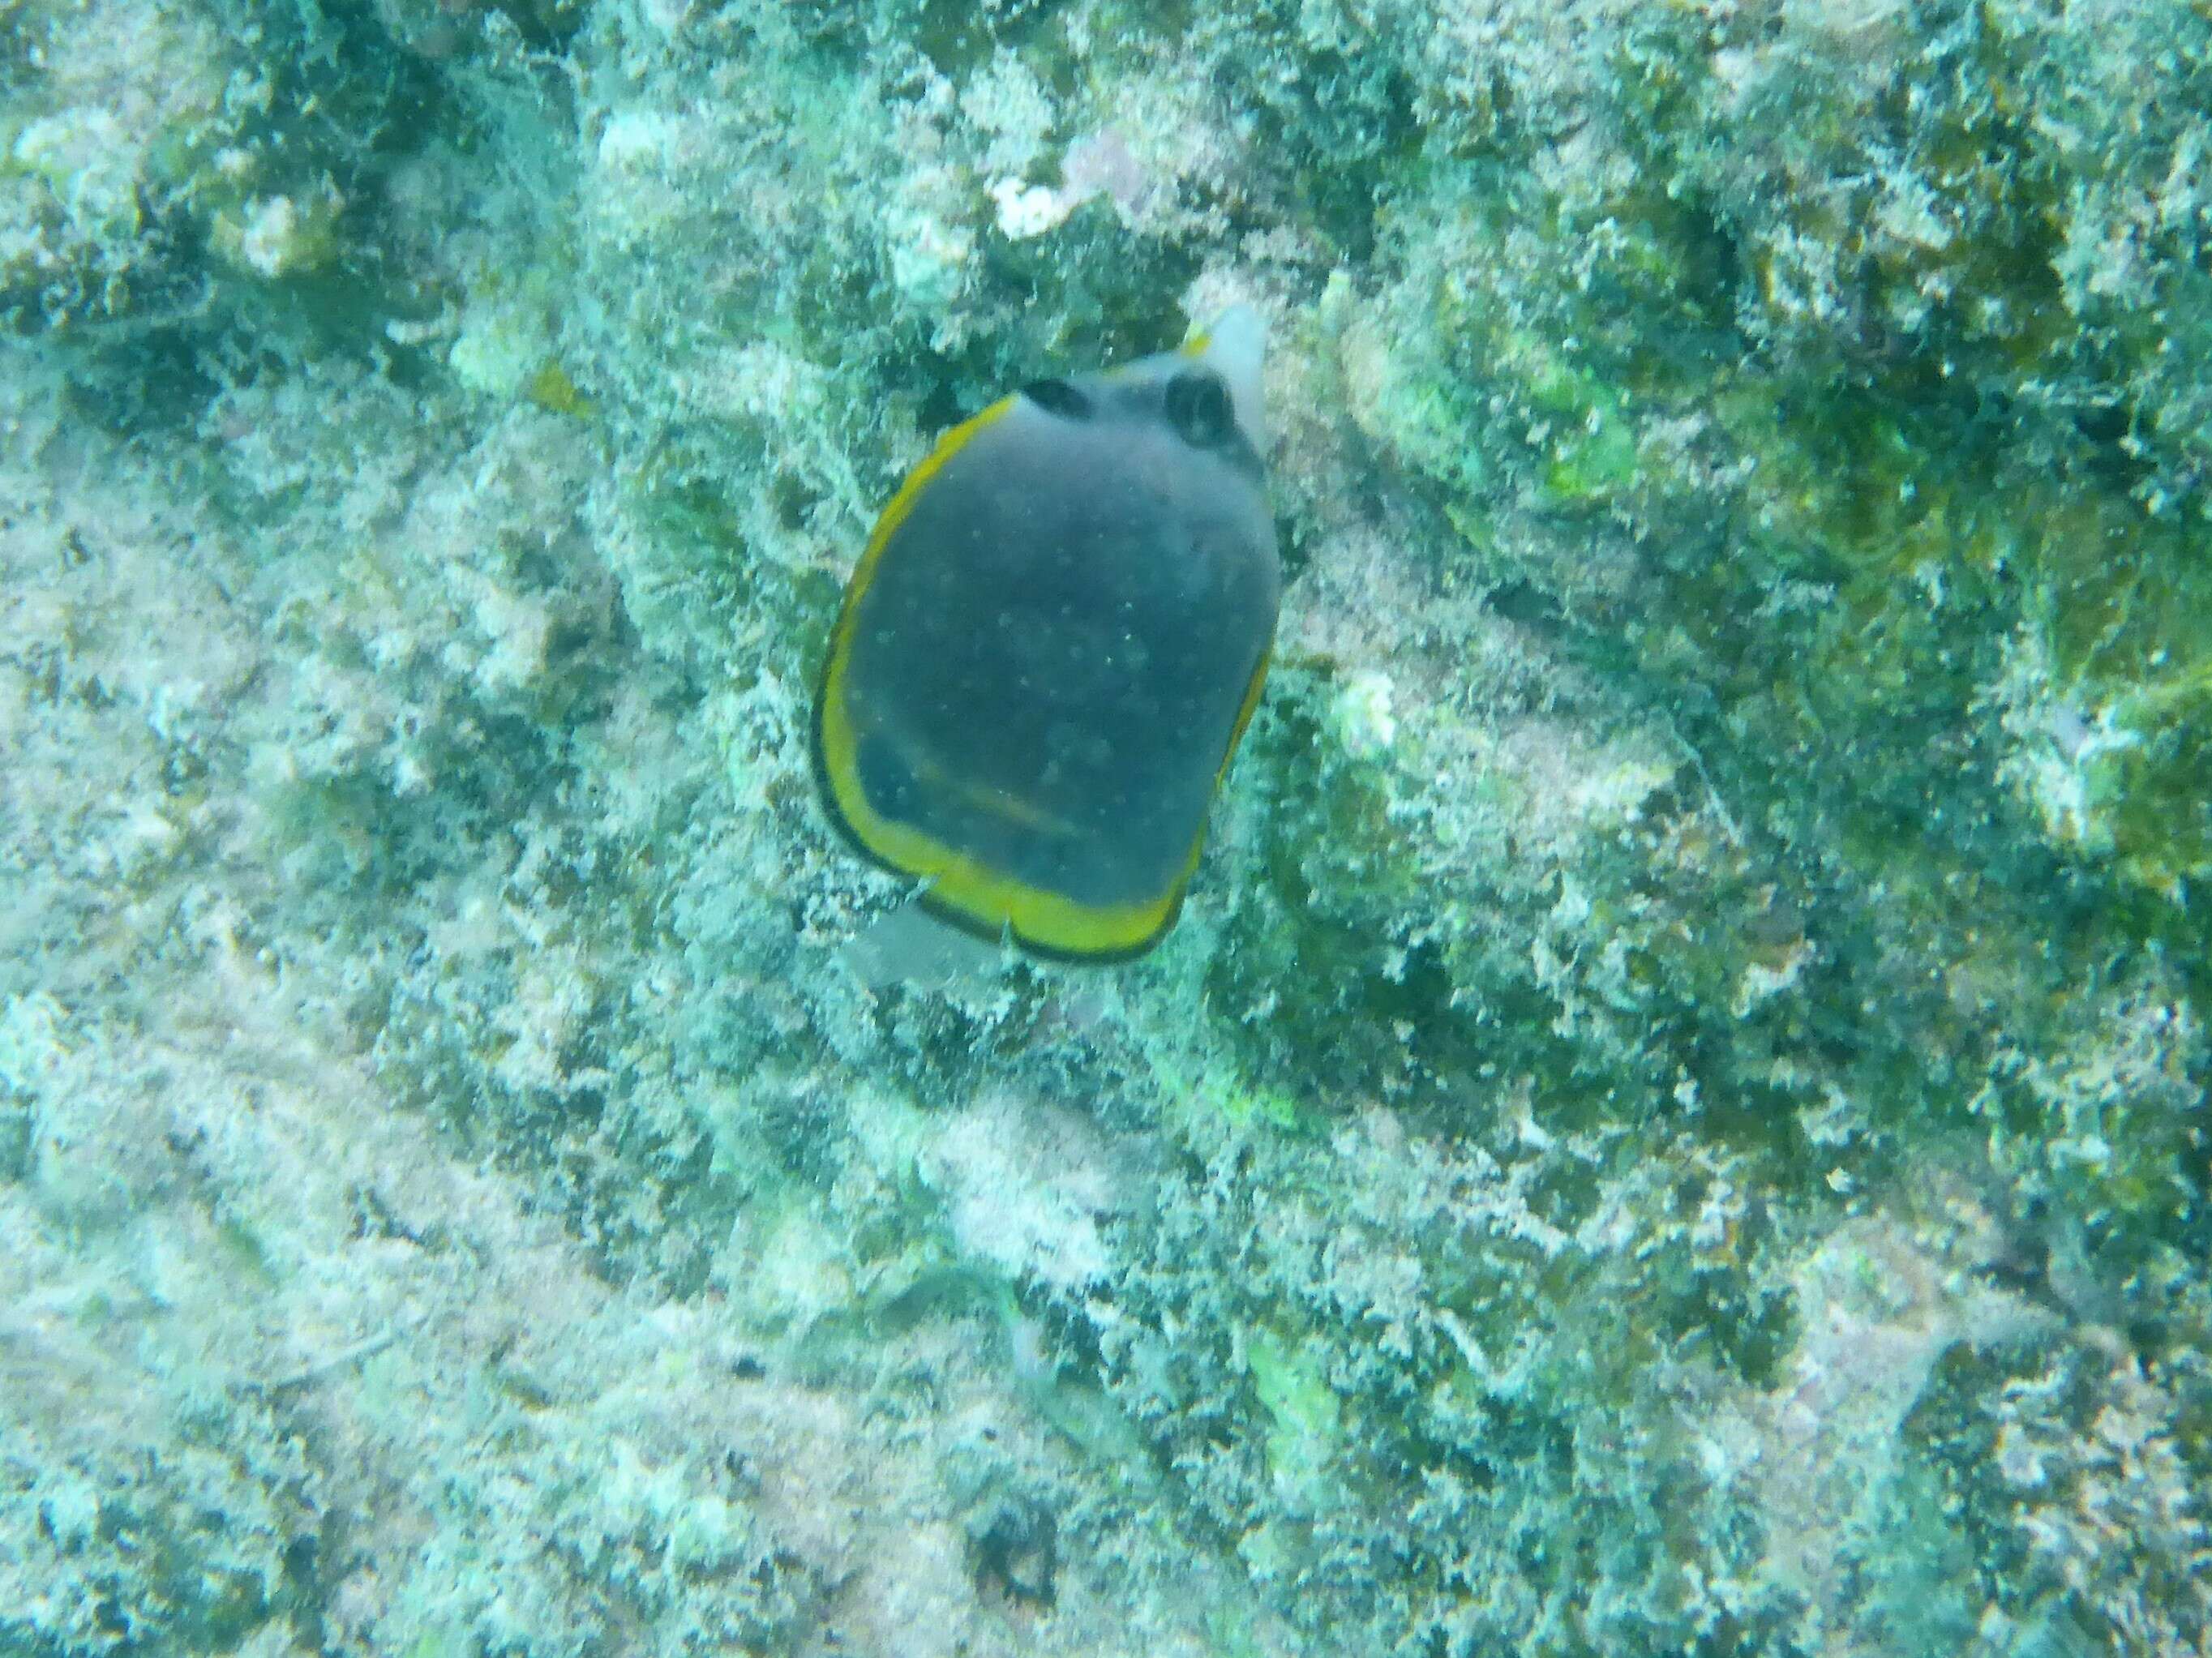 Image of Black Butterflyfish